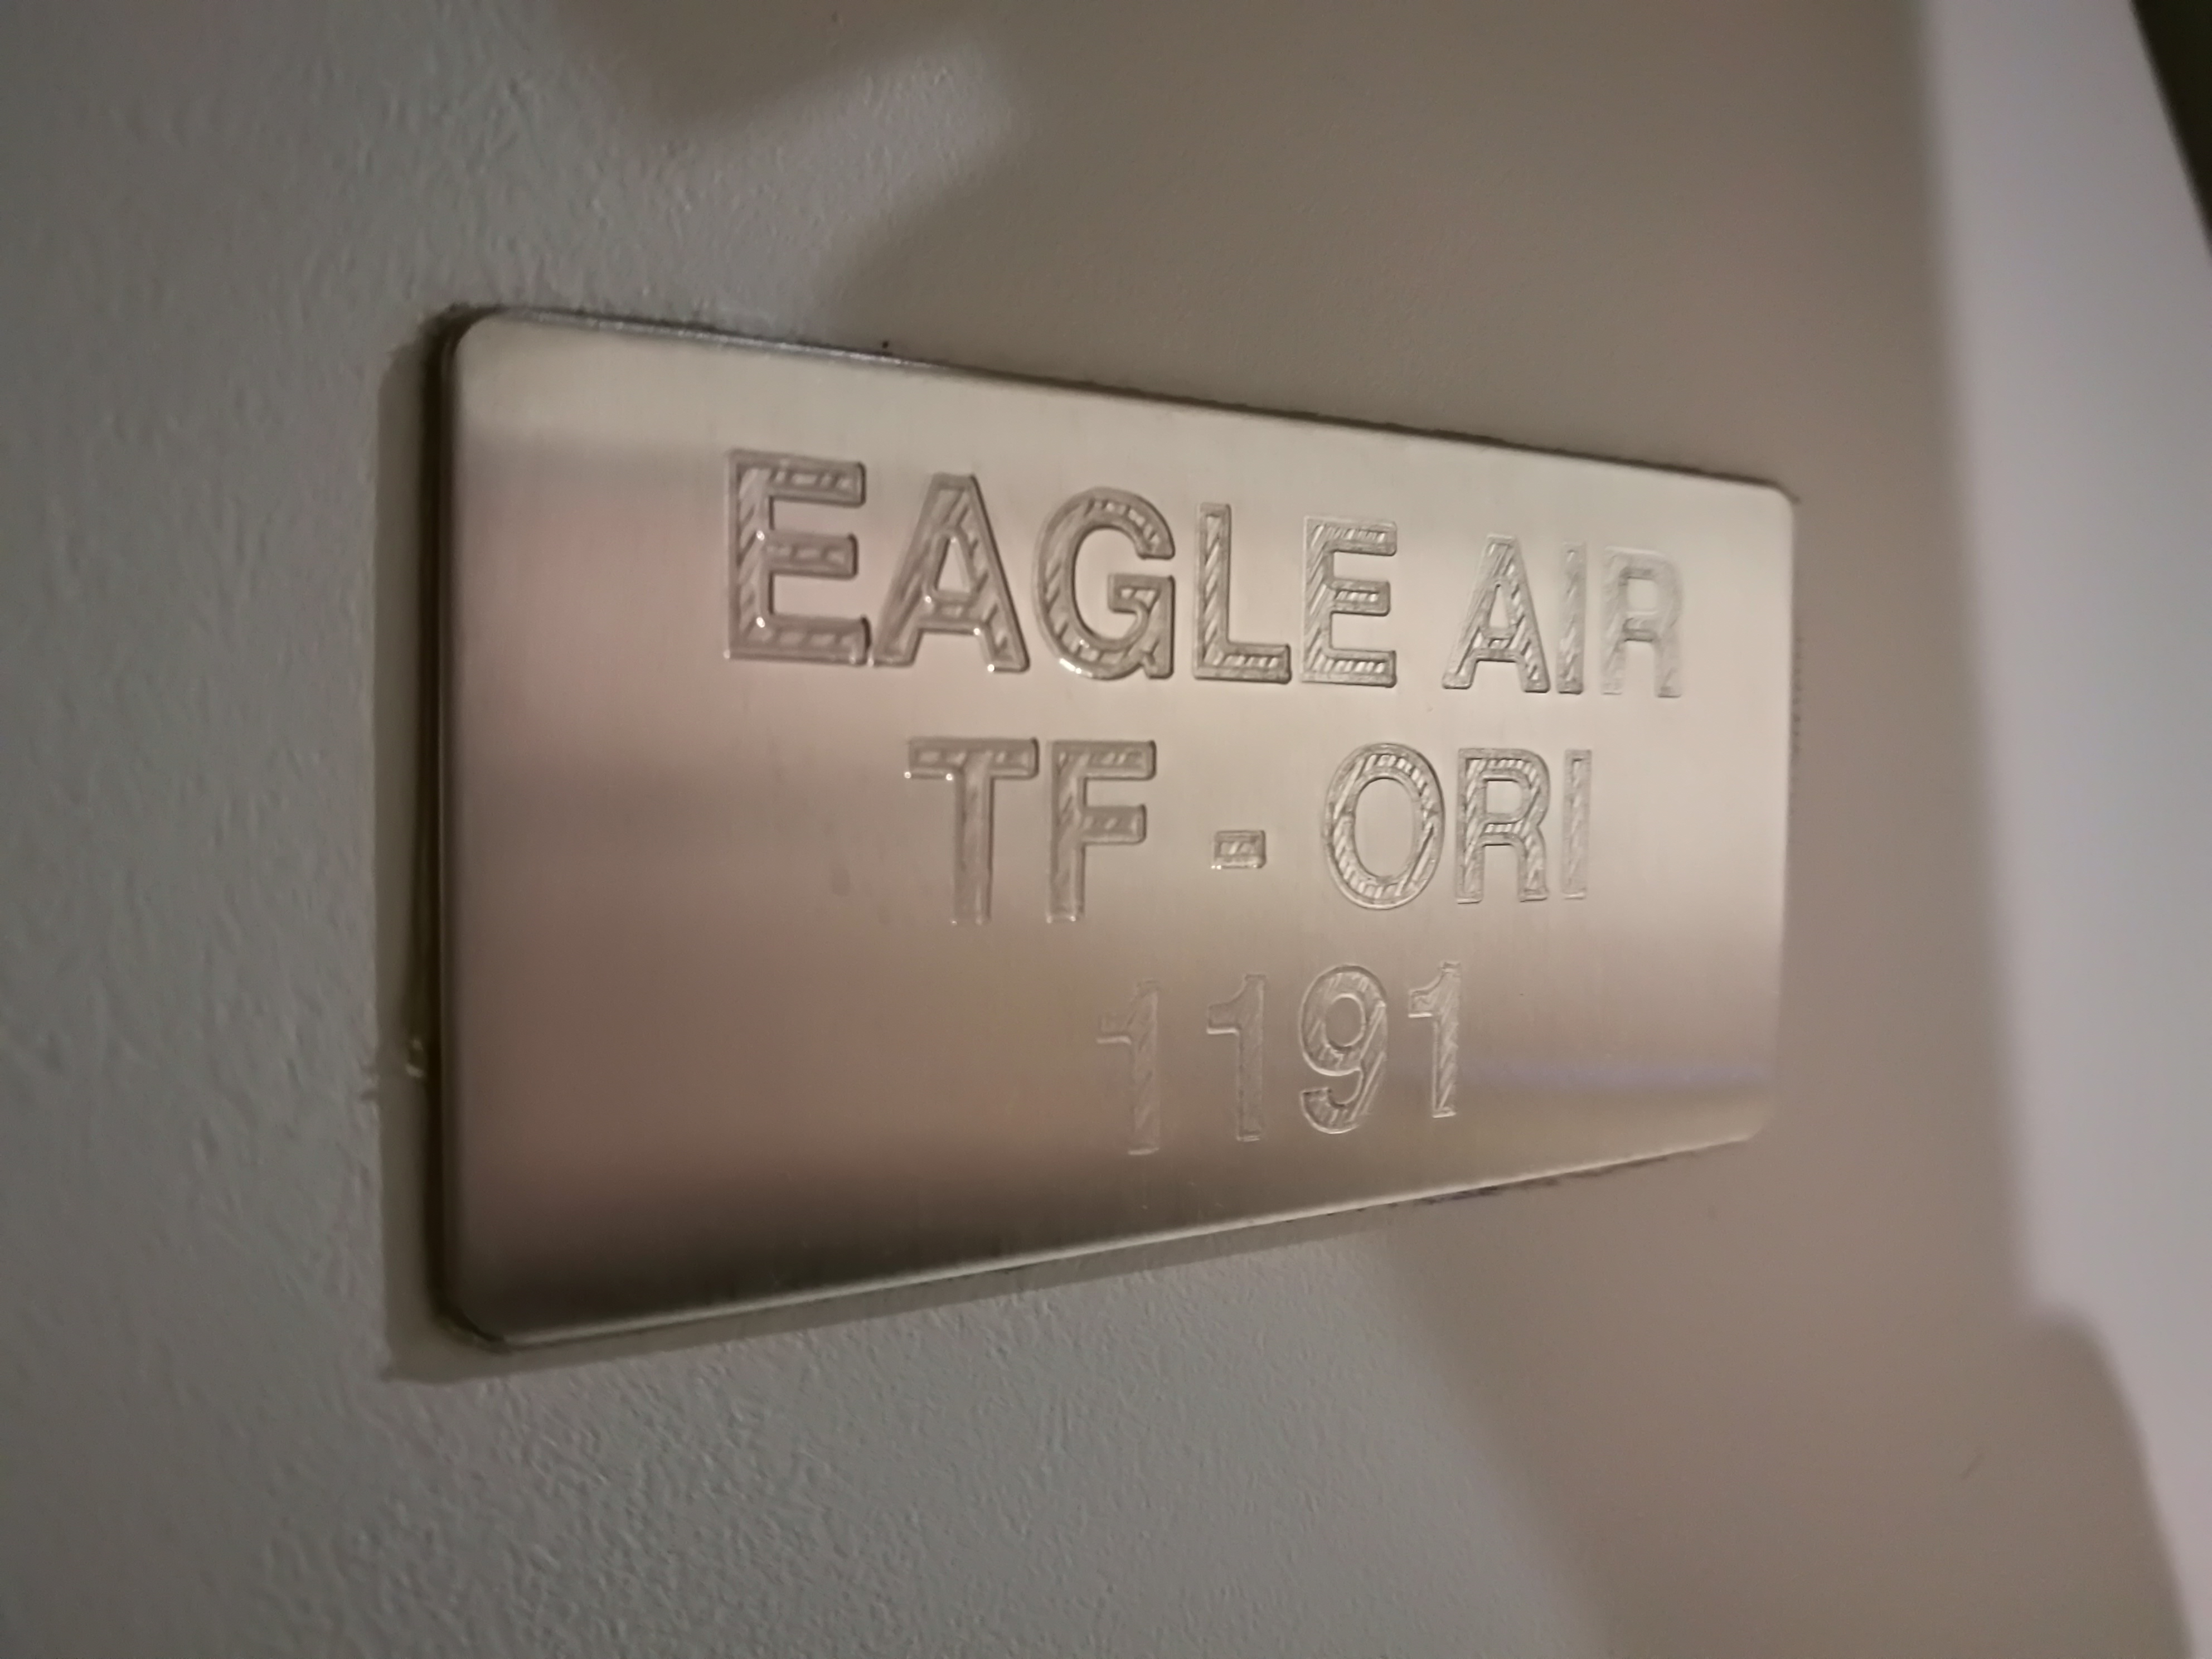 The plate of "Eagle Air" Dornier 328 (reg. TF-ORI) // Source: Flugblogg